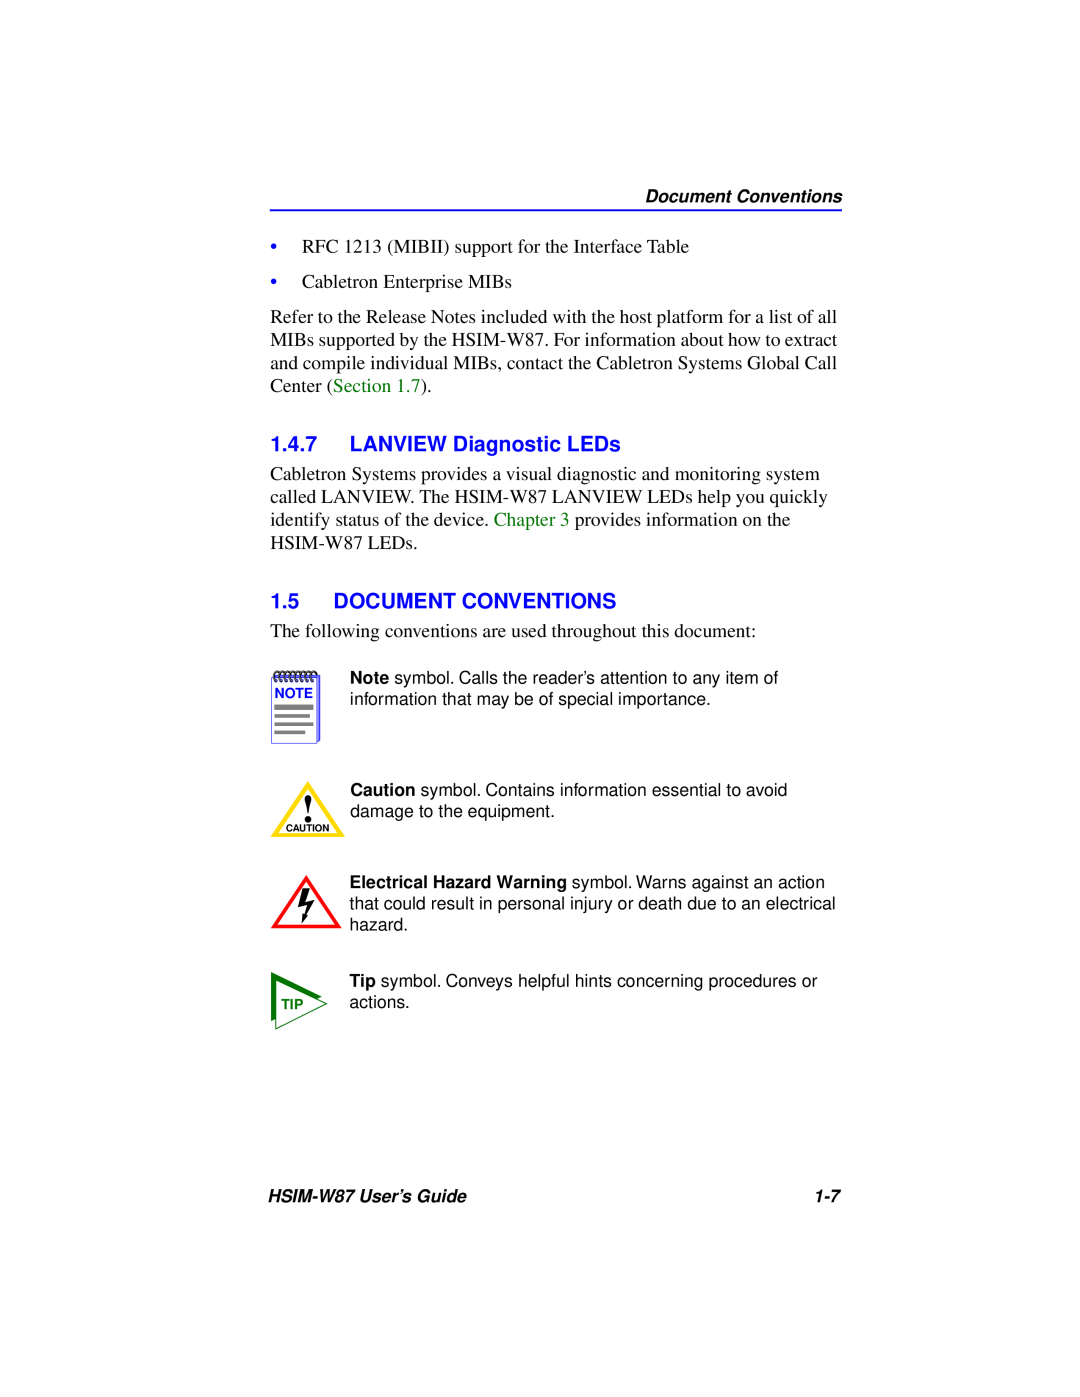 Cabletron Systems HSIM-W87 manual LANVIEW Diagnostic LEDs, Document Conventions 